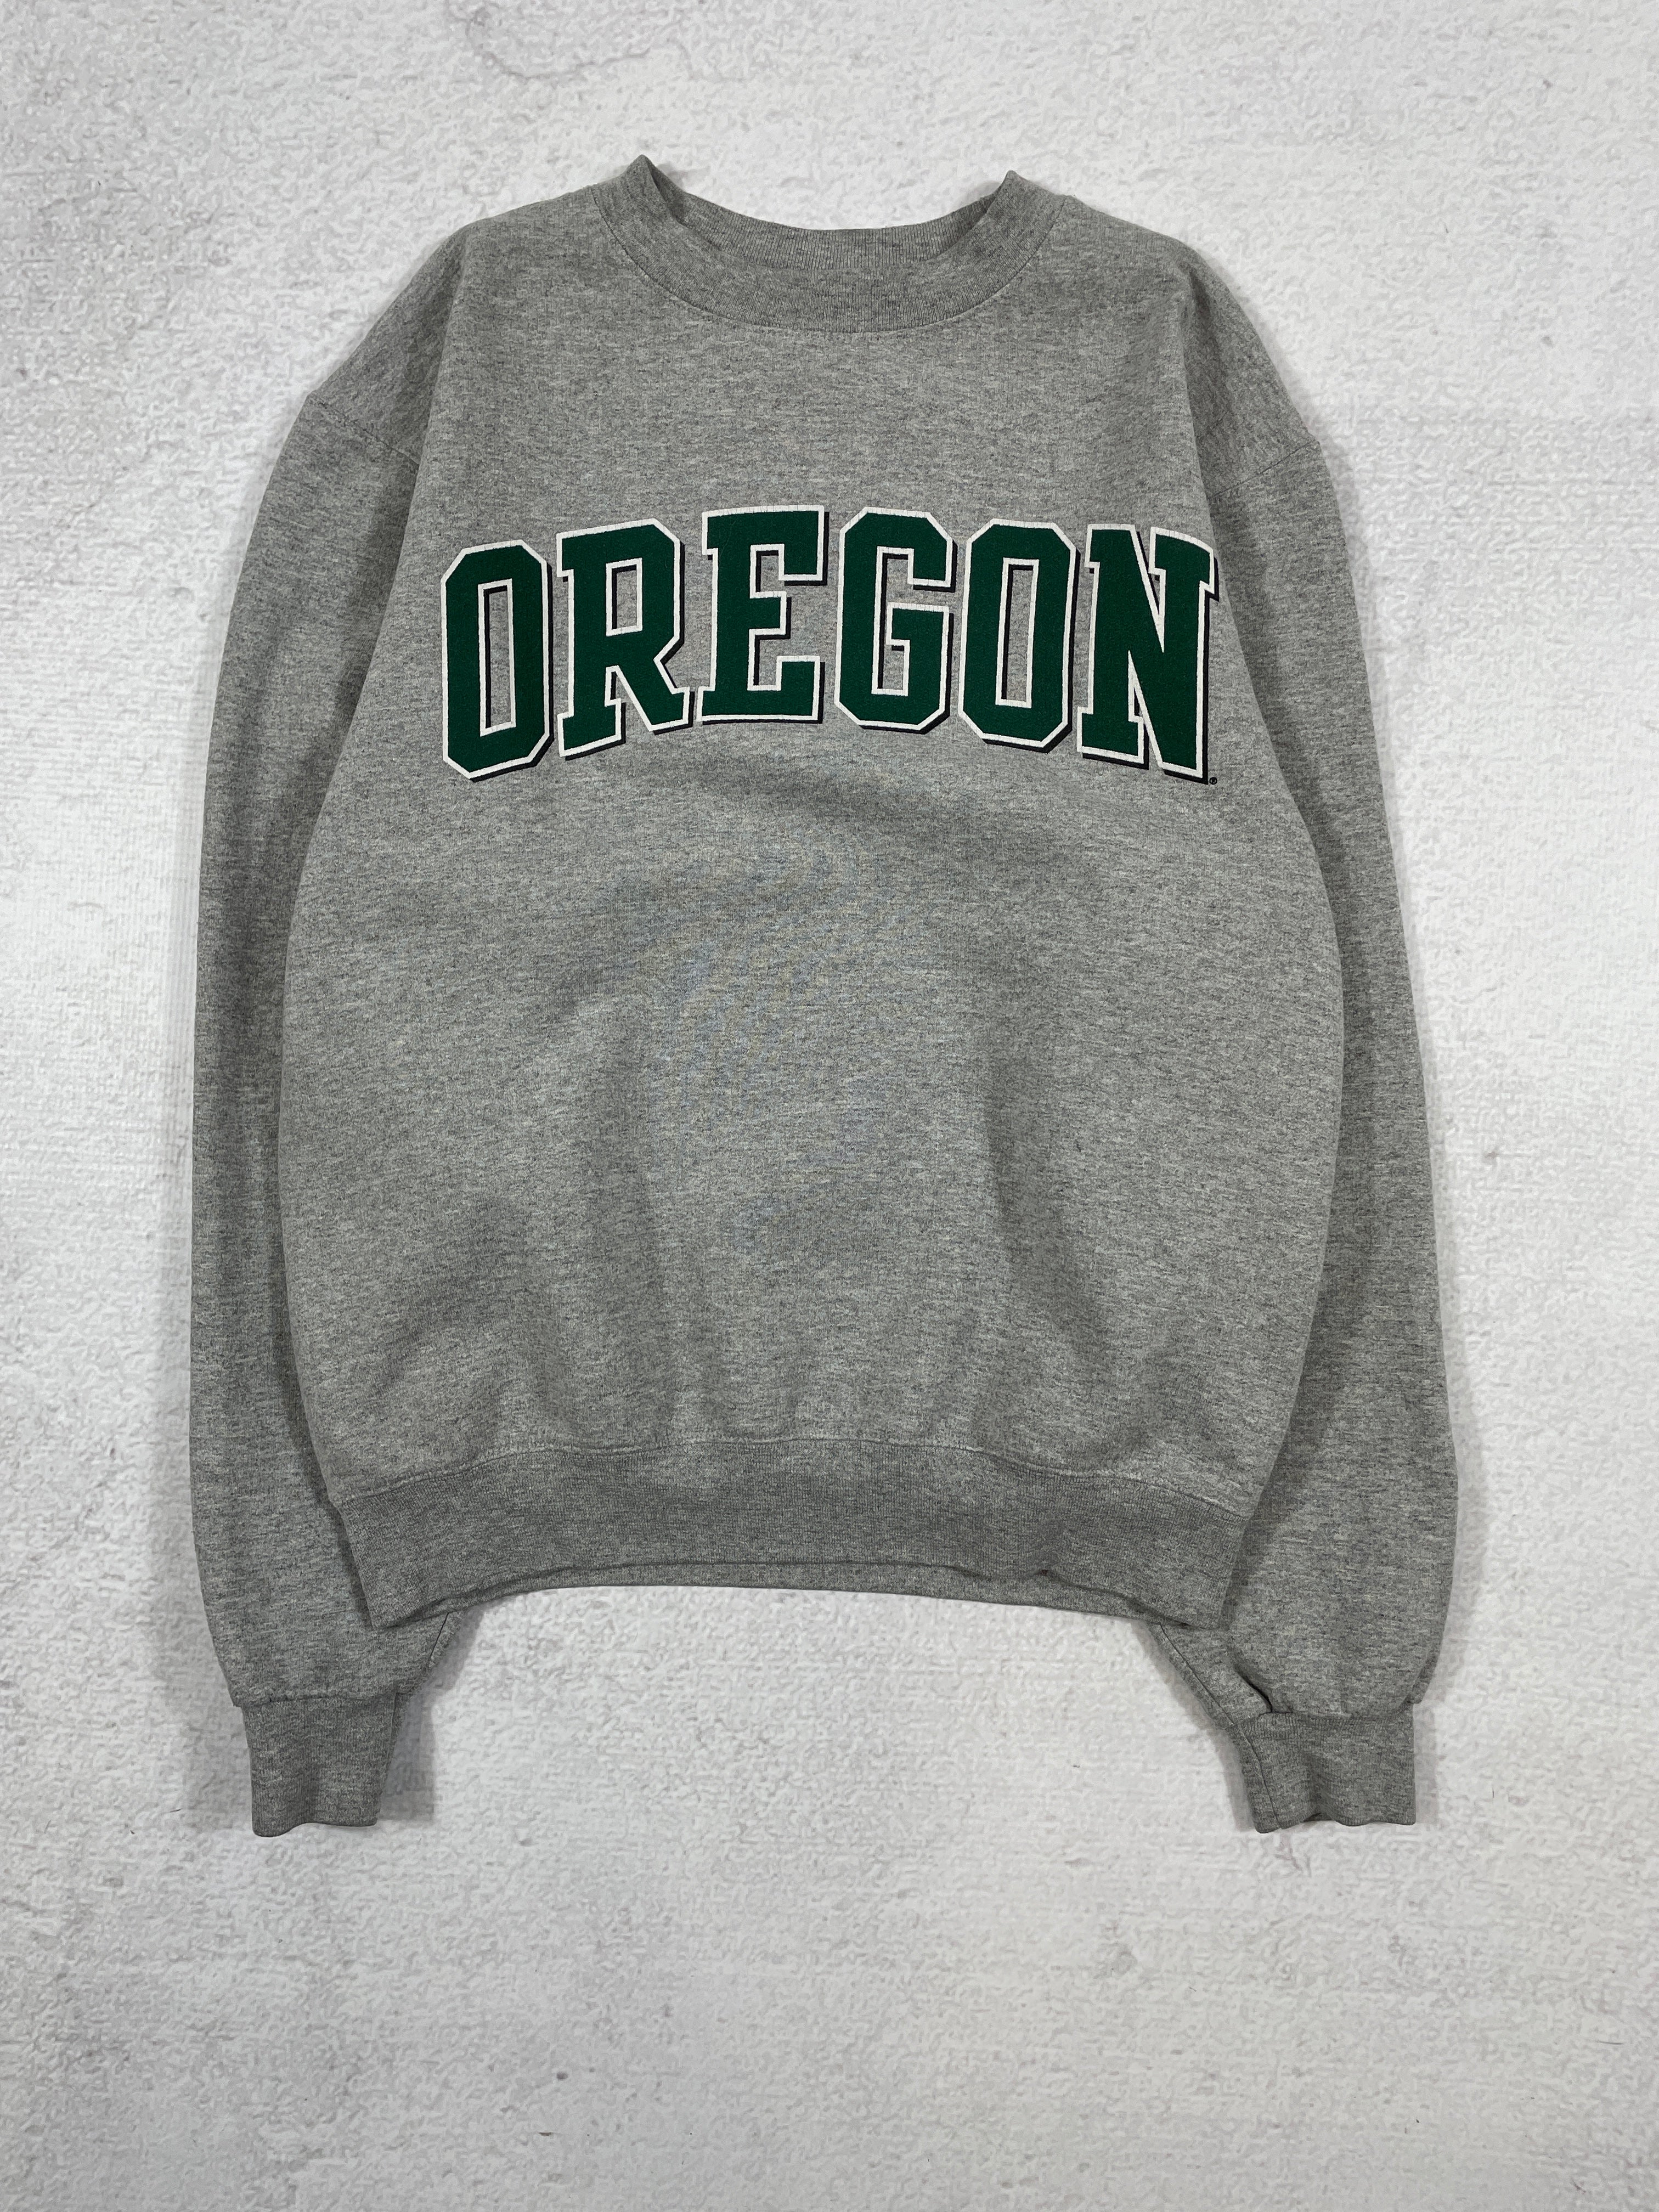 Champion Oregon Crewneck Sweatshirt - Men's Small